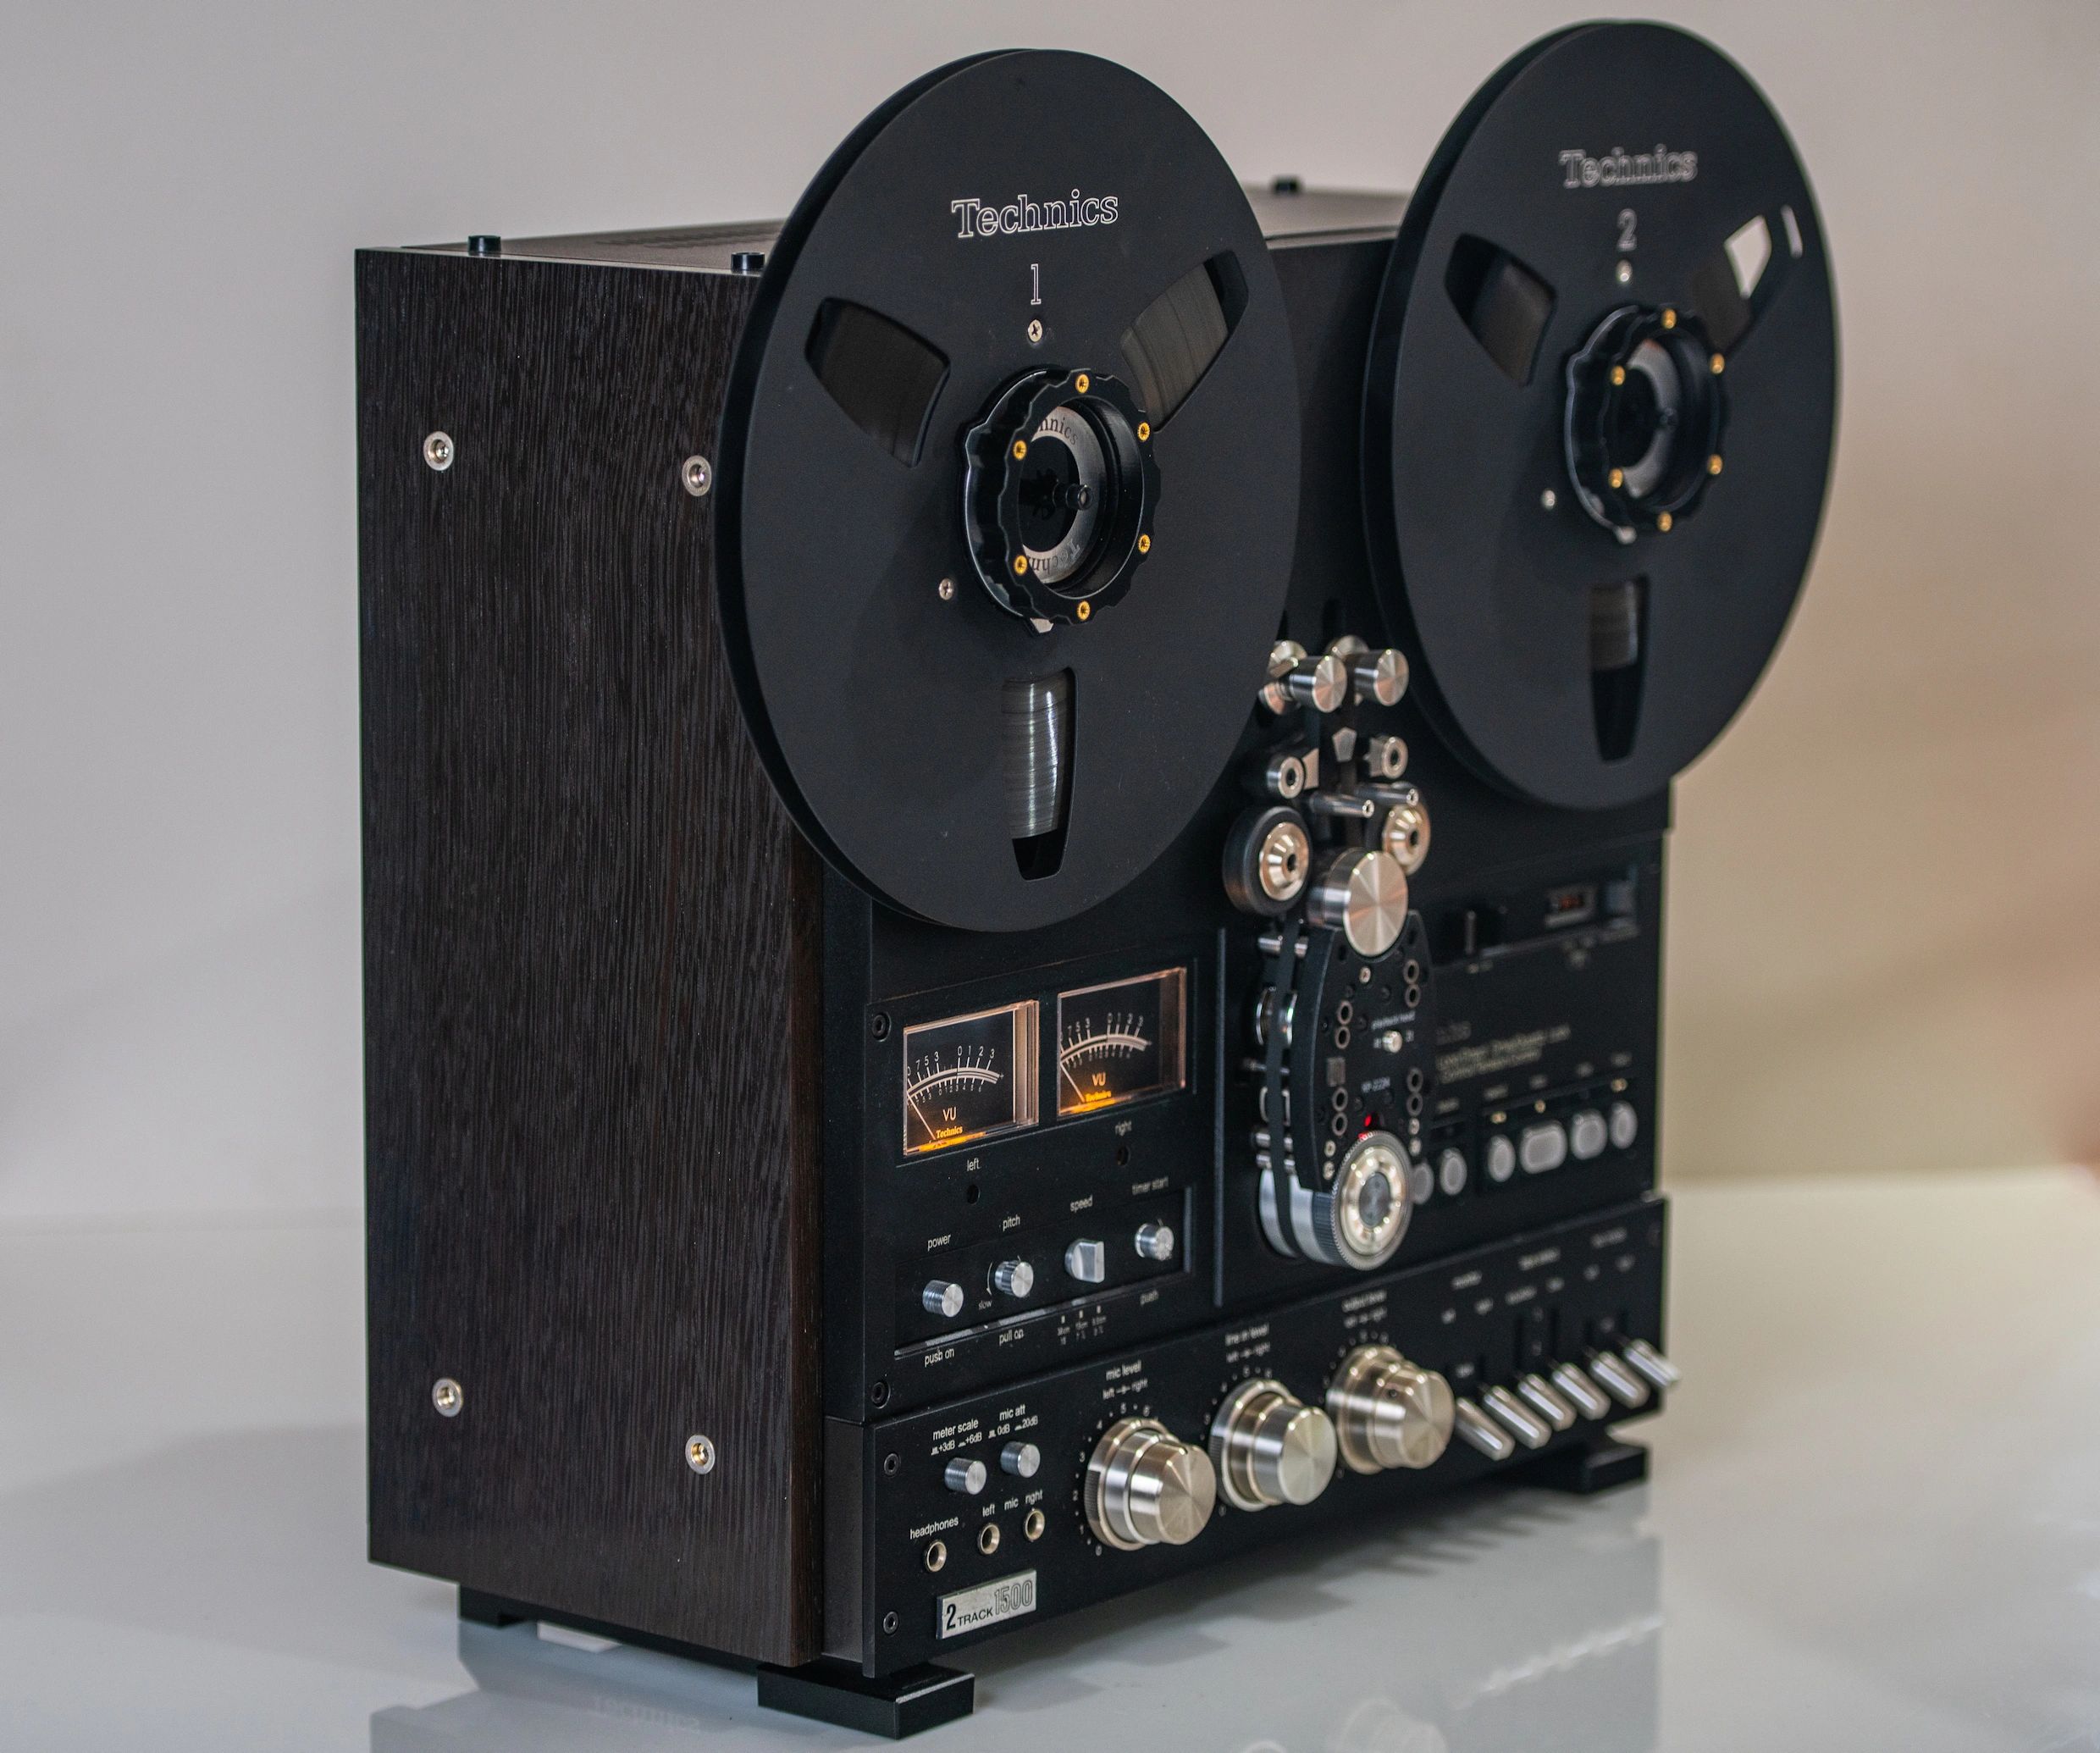 Restored Technics RS-1700 reel-to-reel tape machine by @alteregoappearance  Simply stunning #hifiporn #highendaudio #audiophile #reeltore